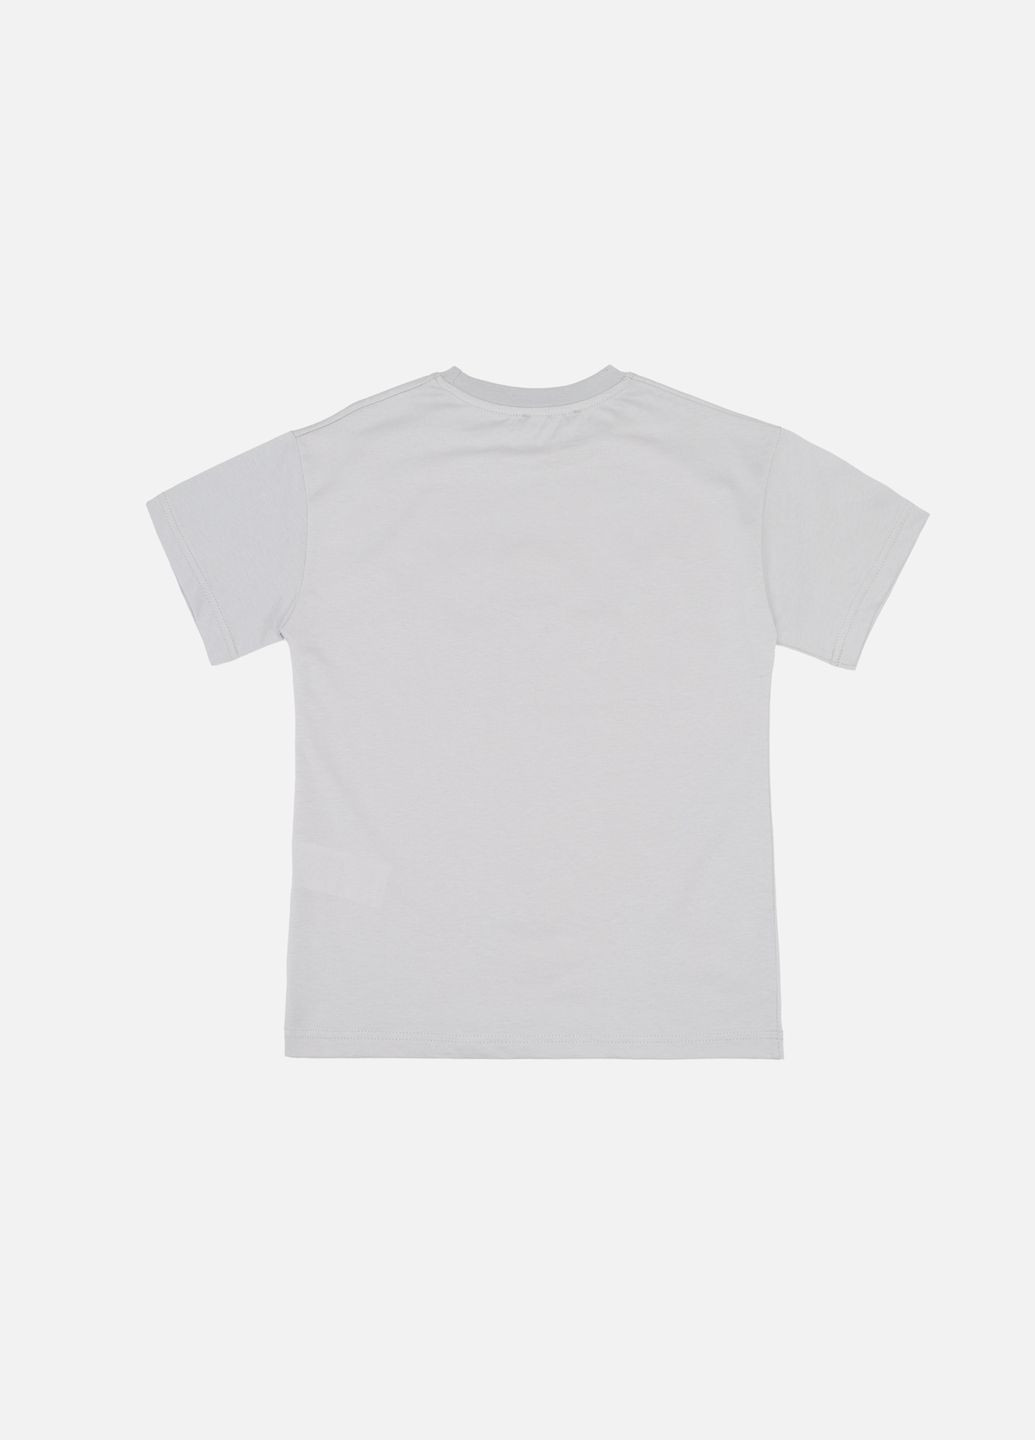 Светло-серая летняя футболка с коротким рукавом для мальчика цвет светло-серый цб-00246441 First Kids